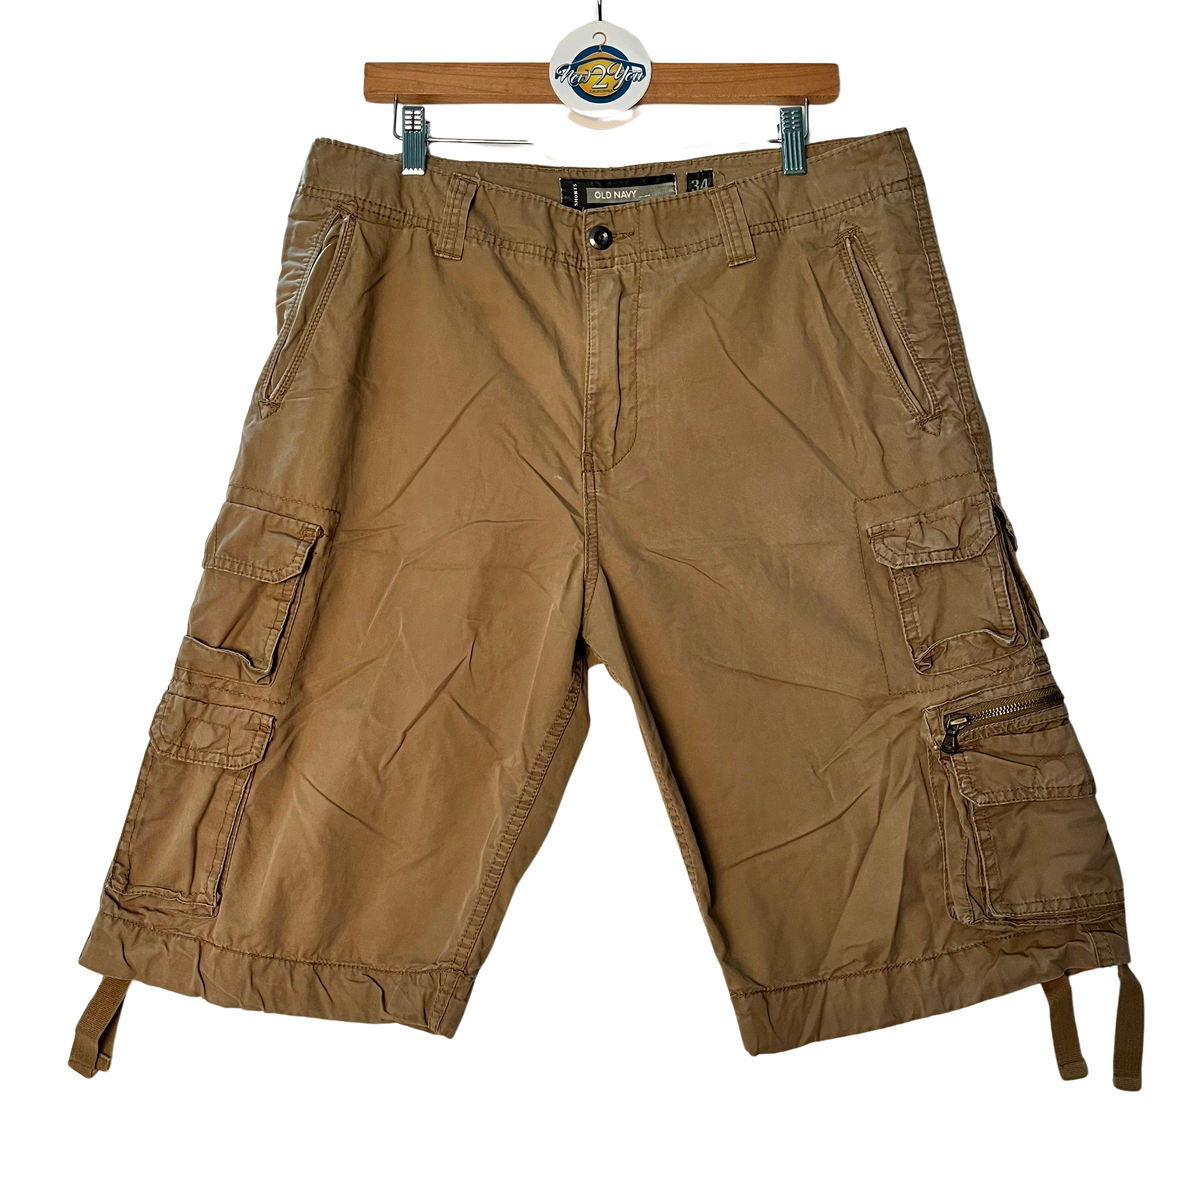 Old Navy Khaki Cargo Shorts